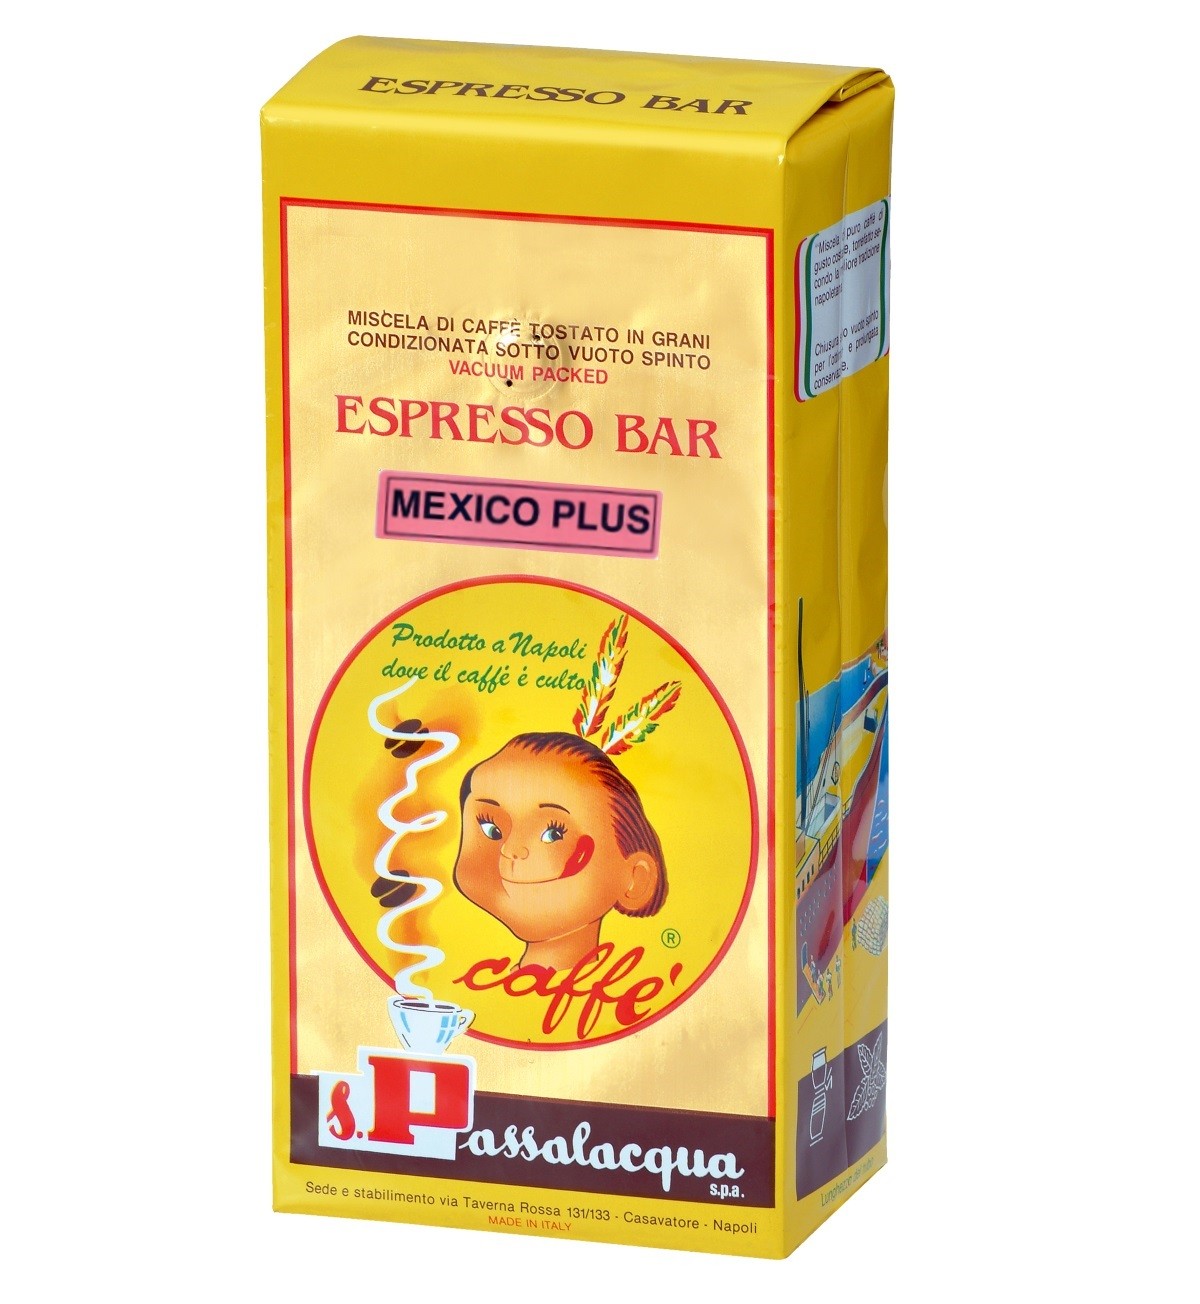 Passalacqua Mexico Plus, Bohnen